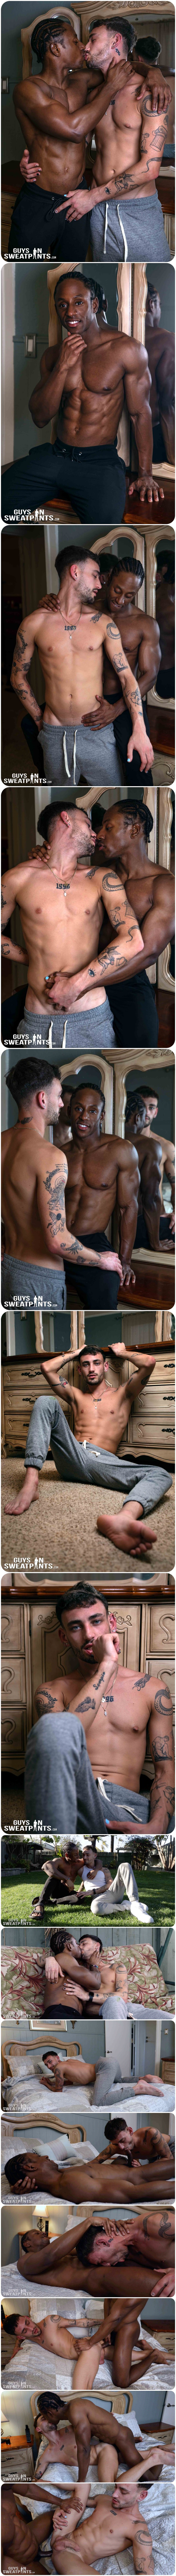 Guys In Sweatpants, Liam Cyber, Benjy